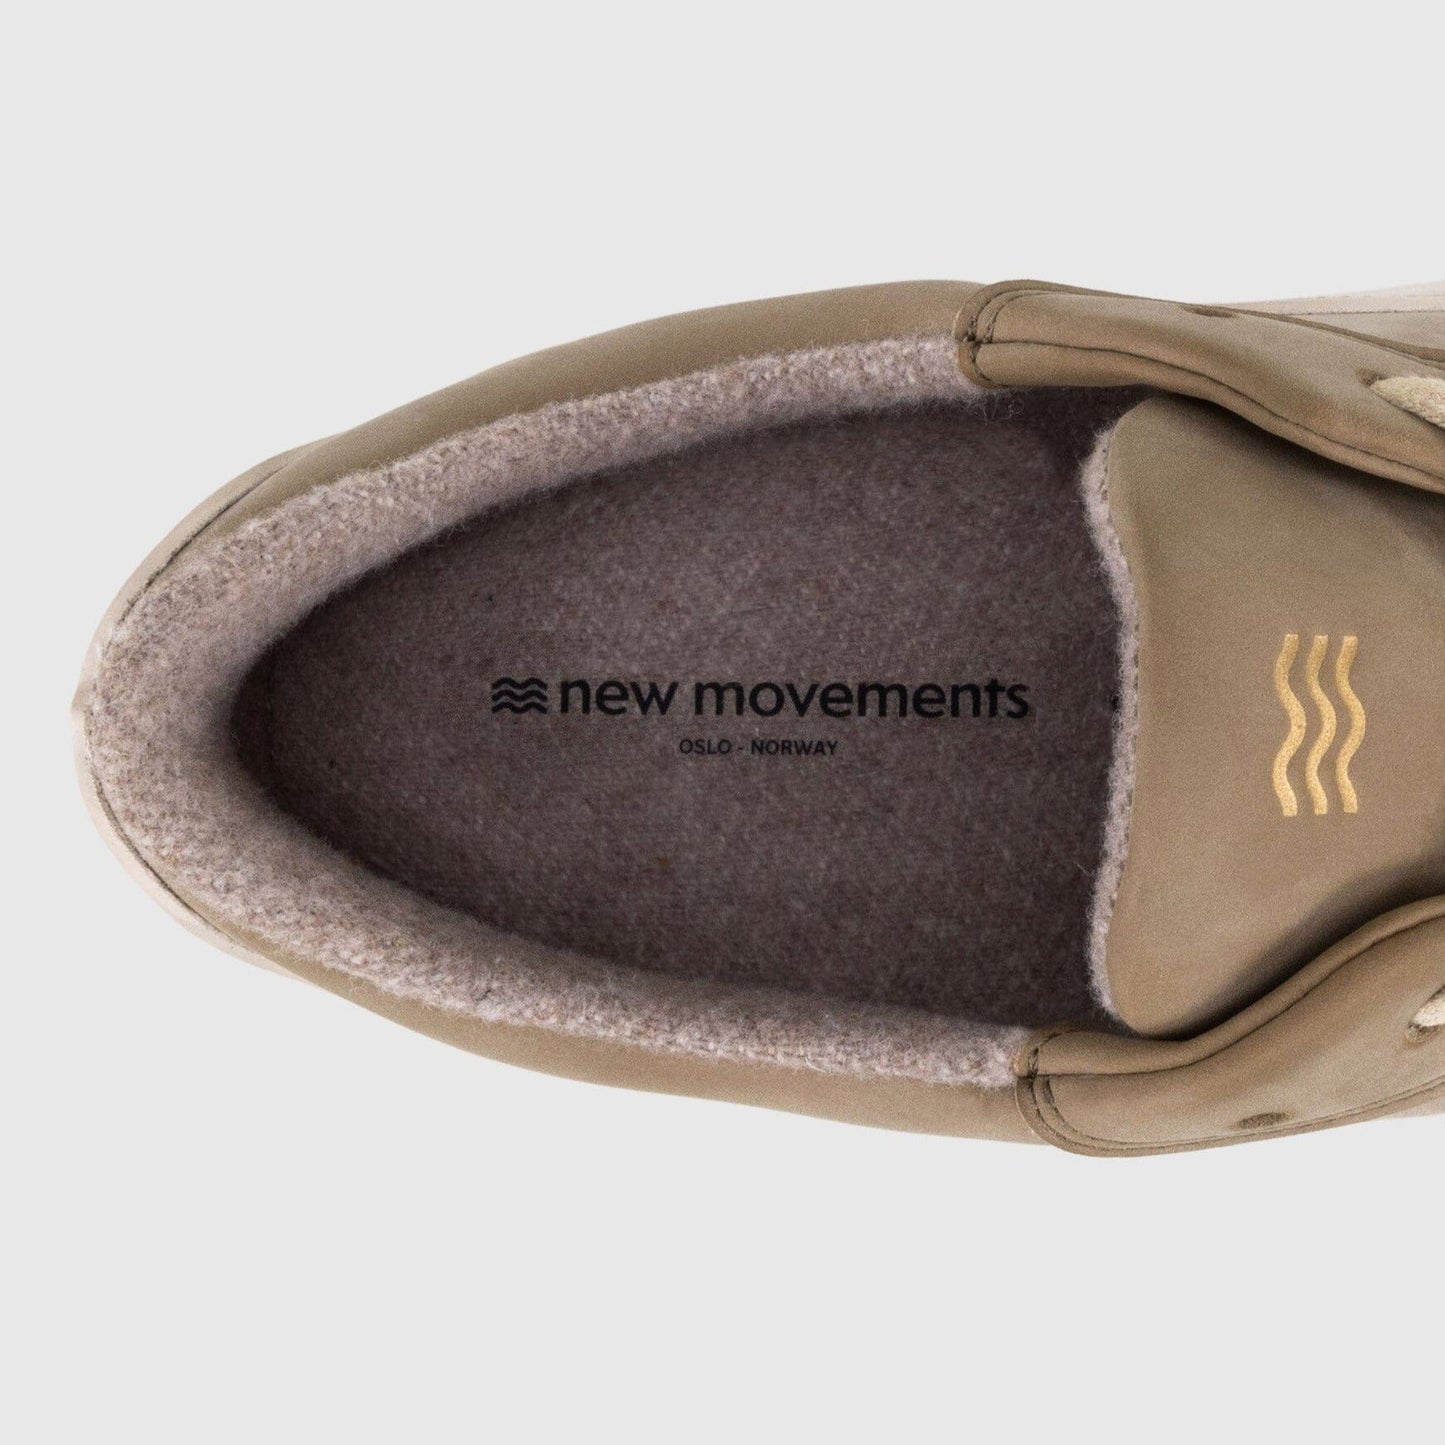 New Movements Allrounder Y - Beige & Brown (Vegan) Sneakers New Movements 